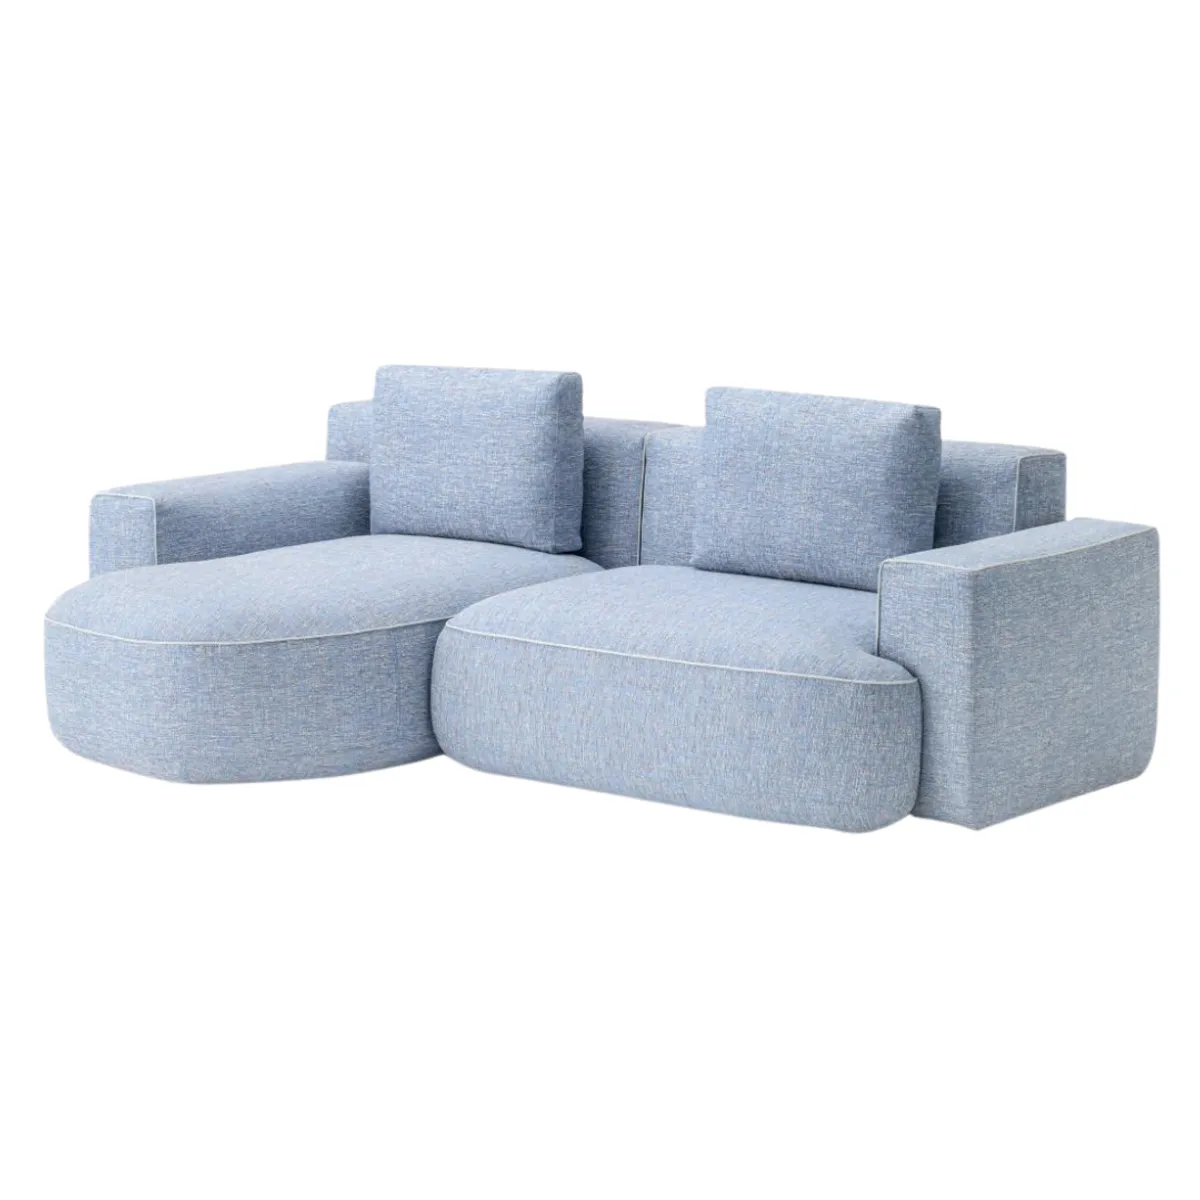 Jeff modular sofa 3